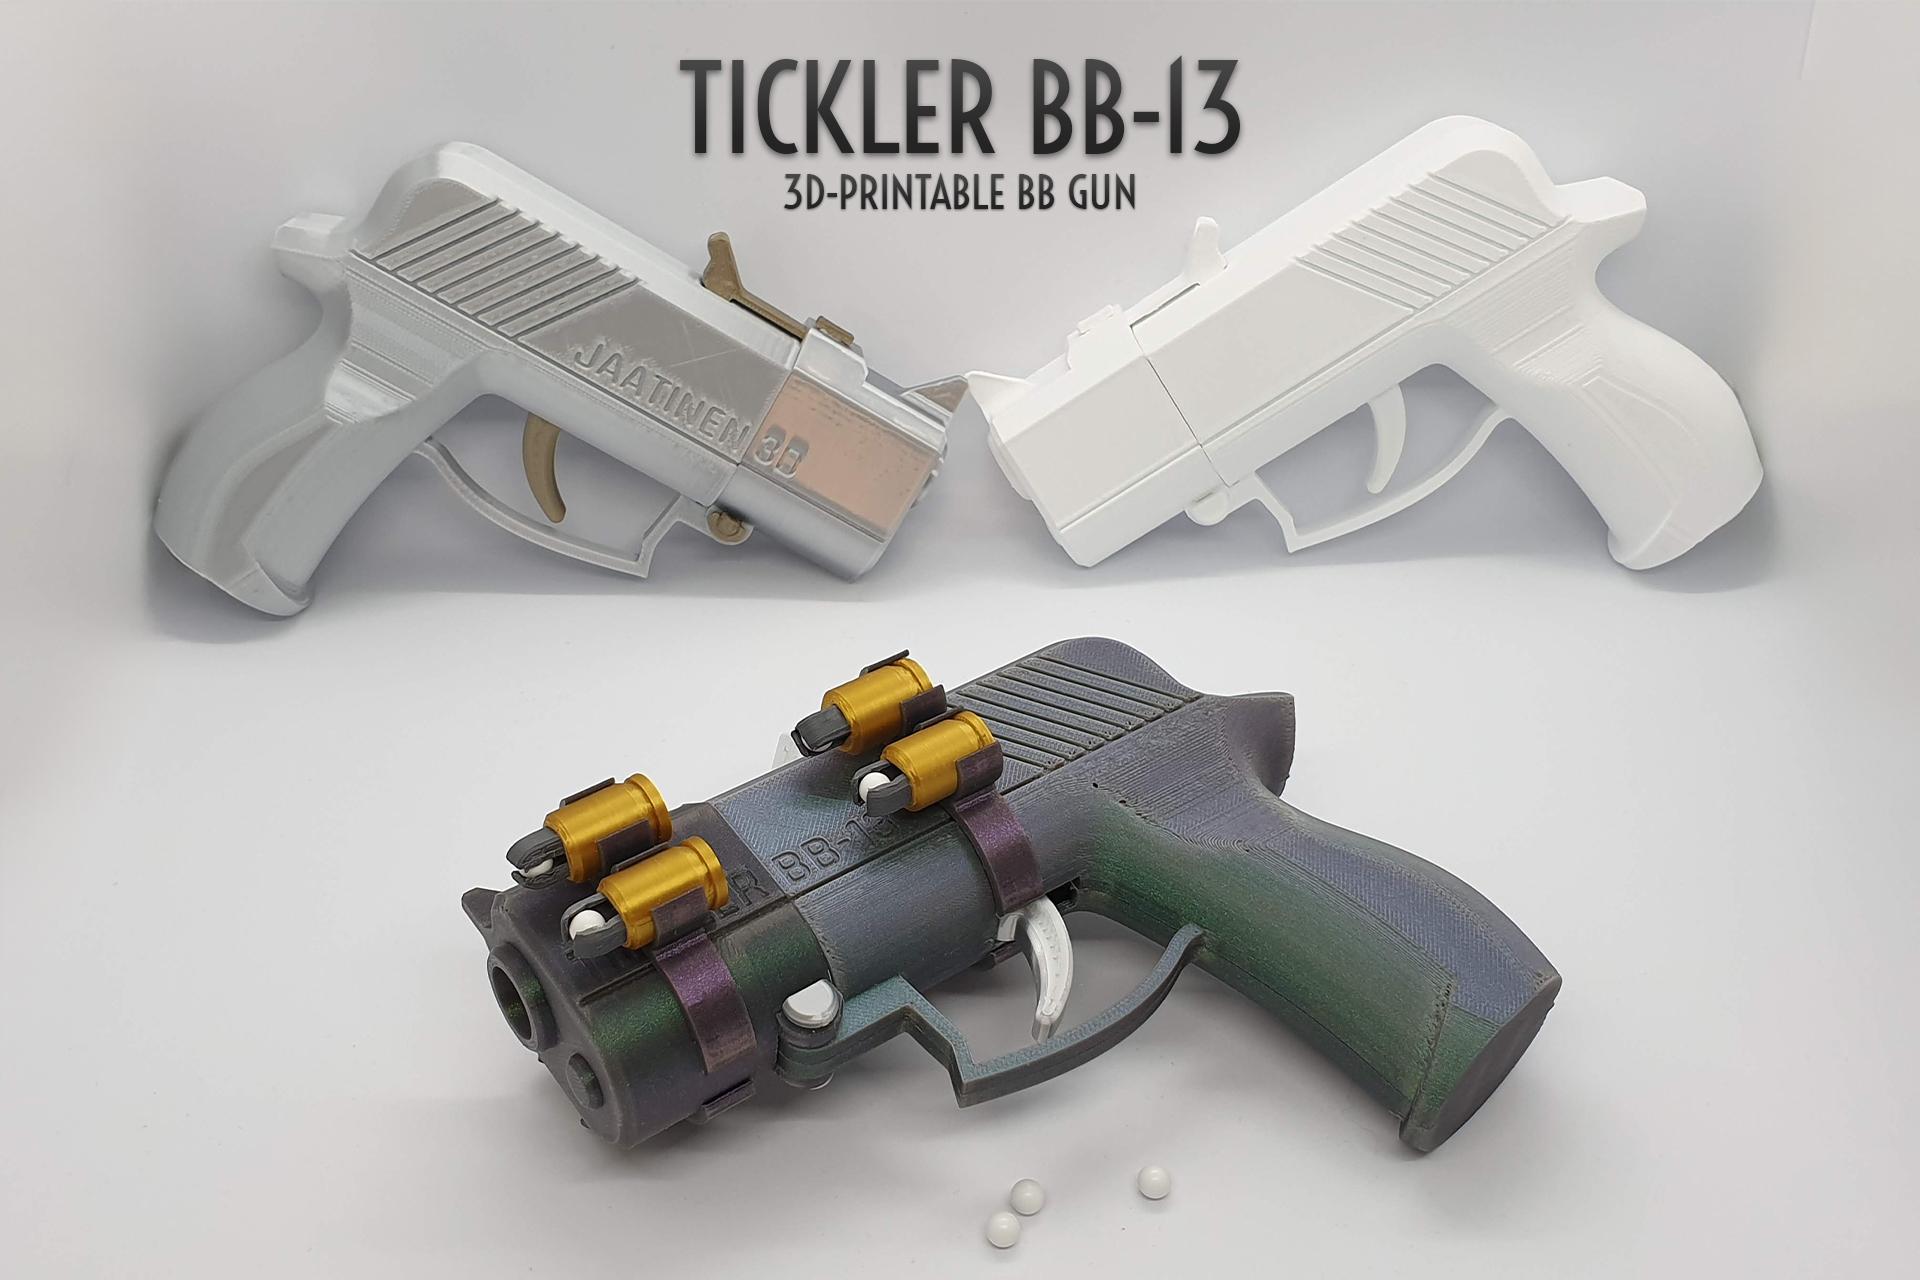 Tickler BB-13